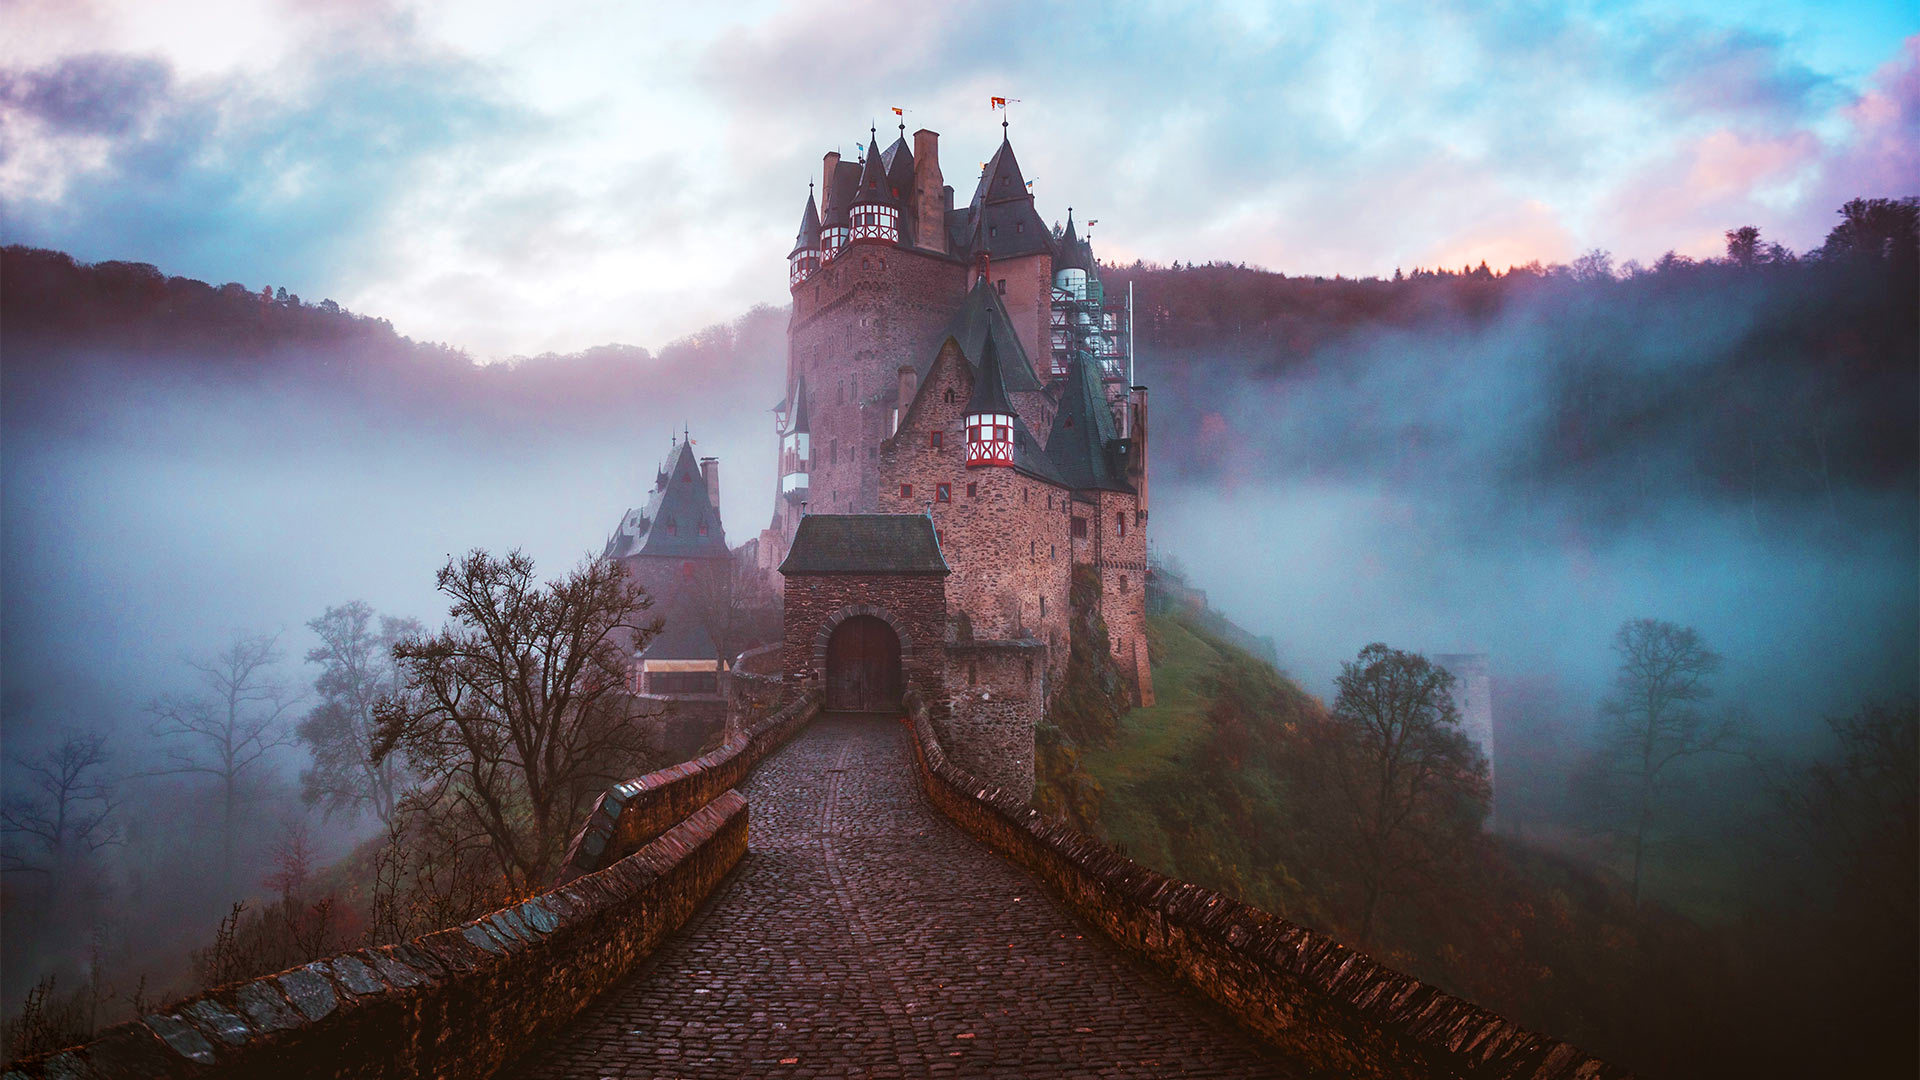 Poesificando: Castelo de sonhos, nas nuvens eu vi